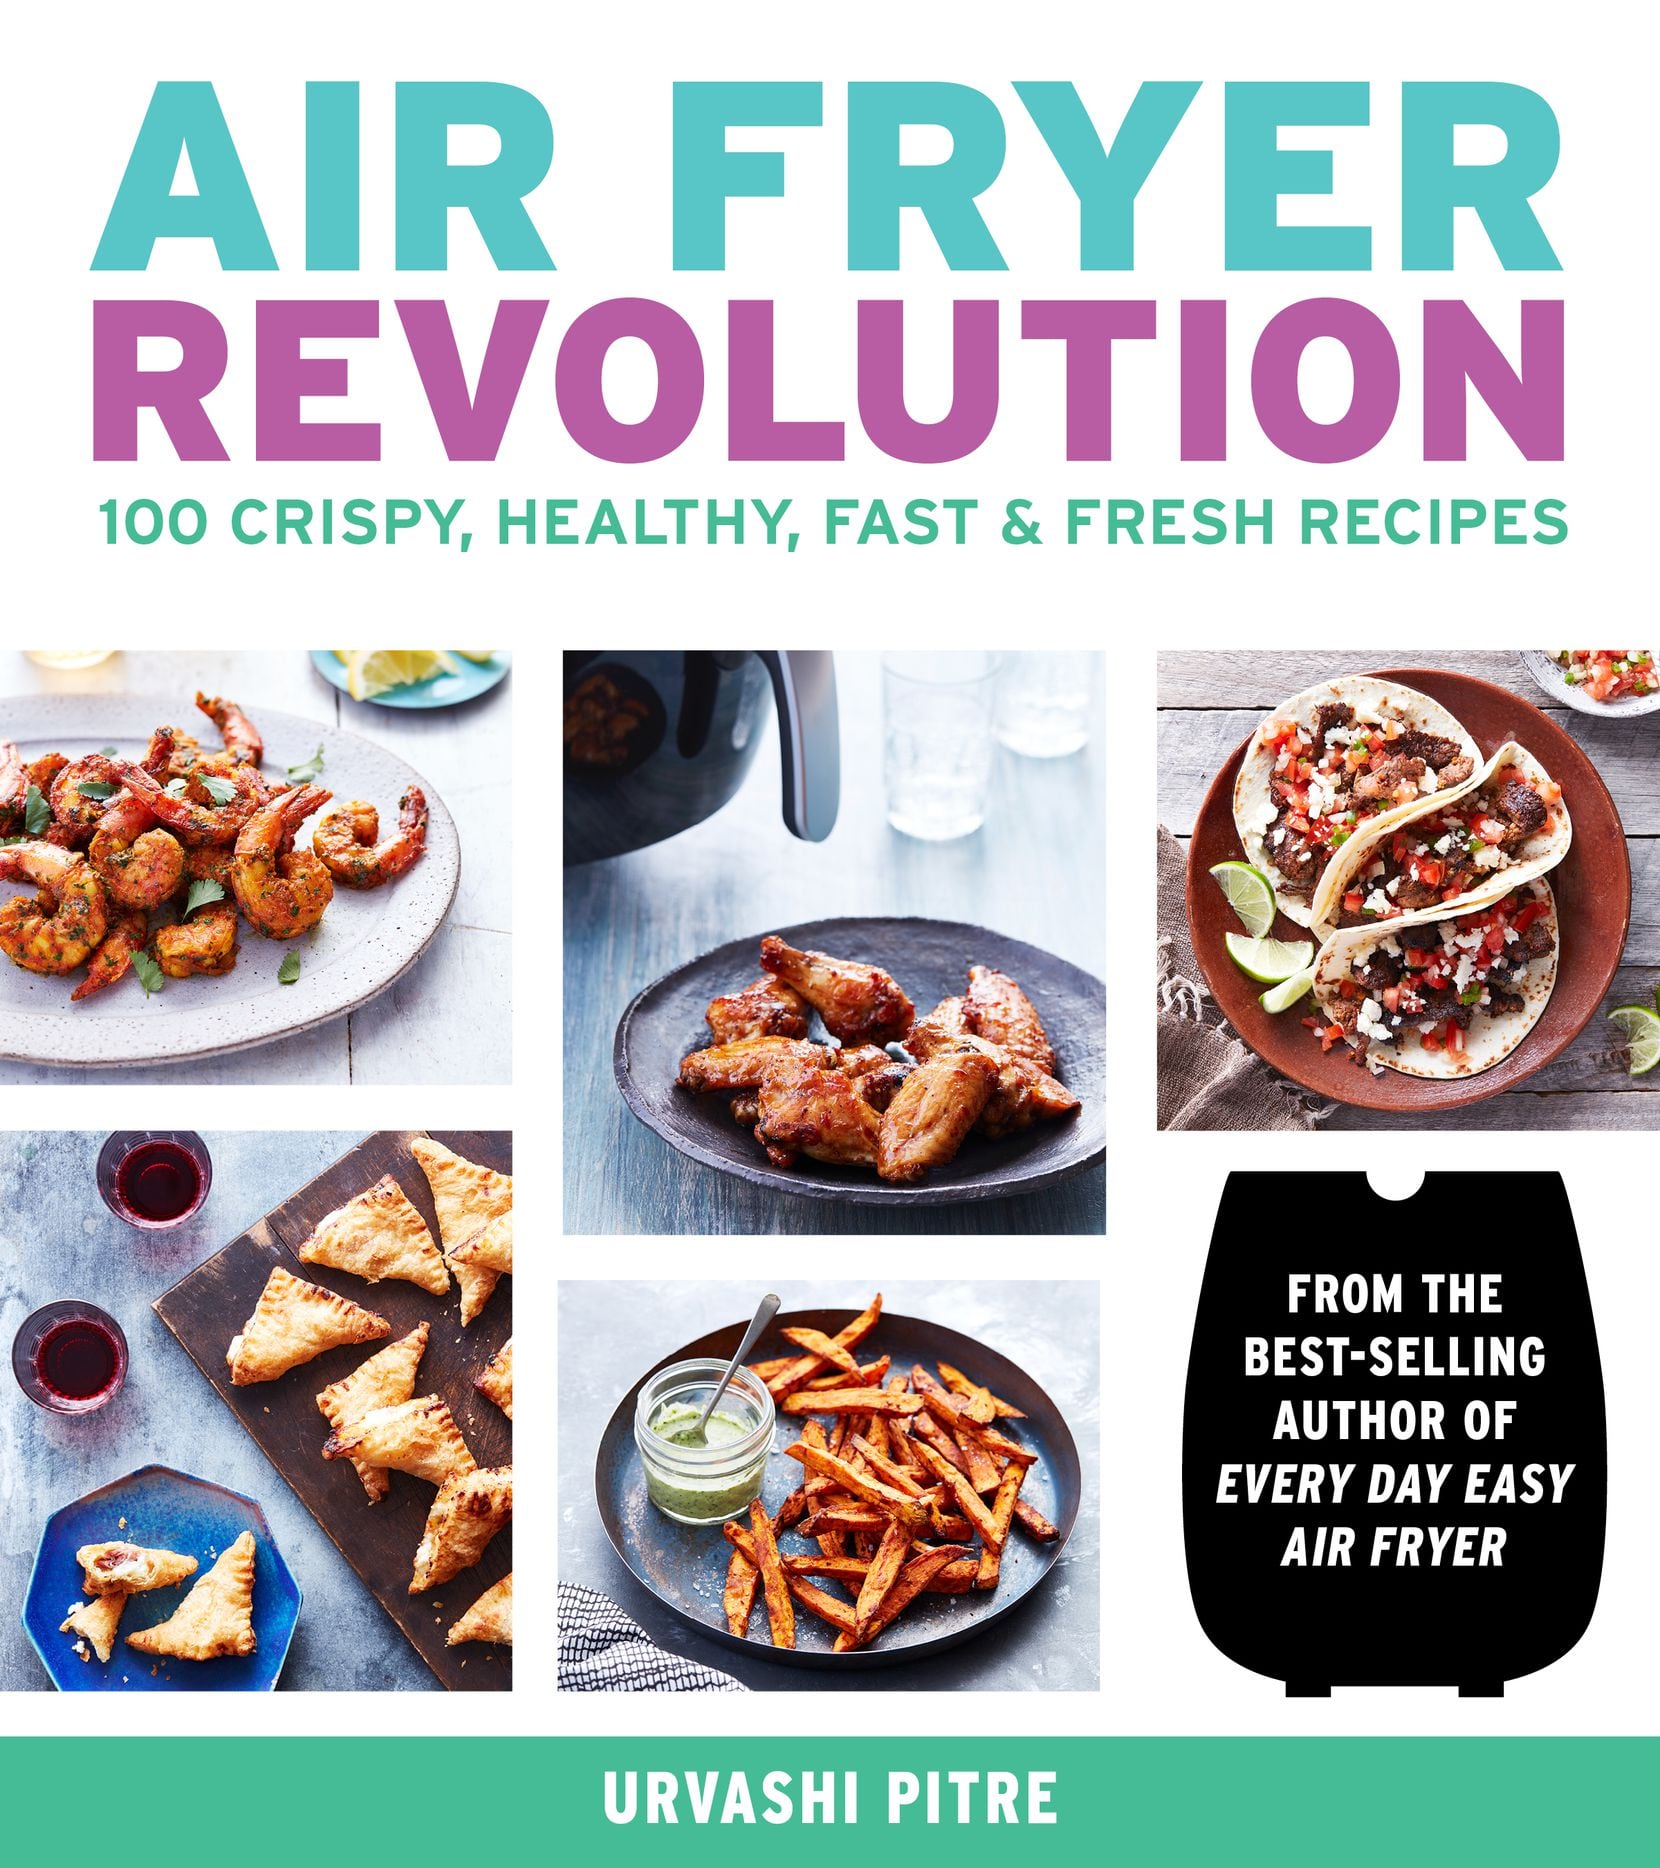 AIR FRYER REVOLUTION: 100 Crispy, Healthy, Fast & Fresh Recipes by Urvashi Pitre.